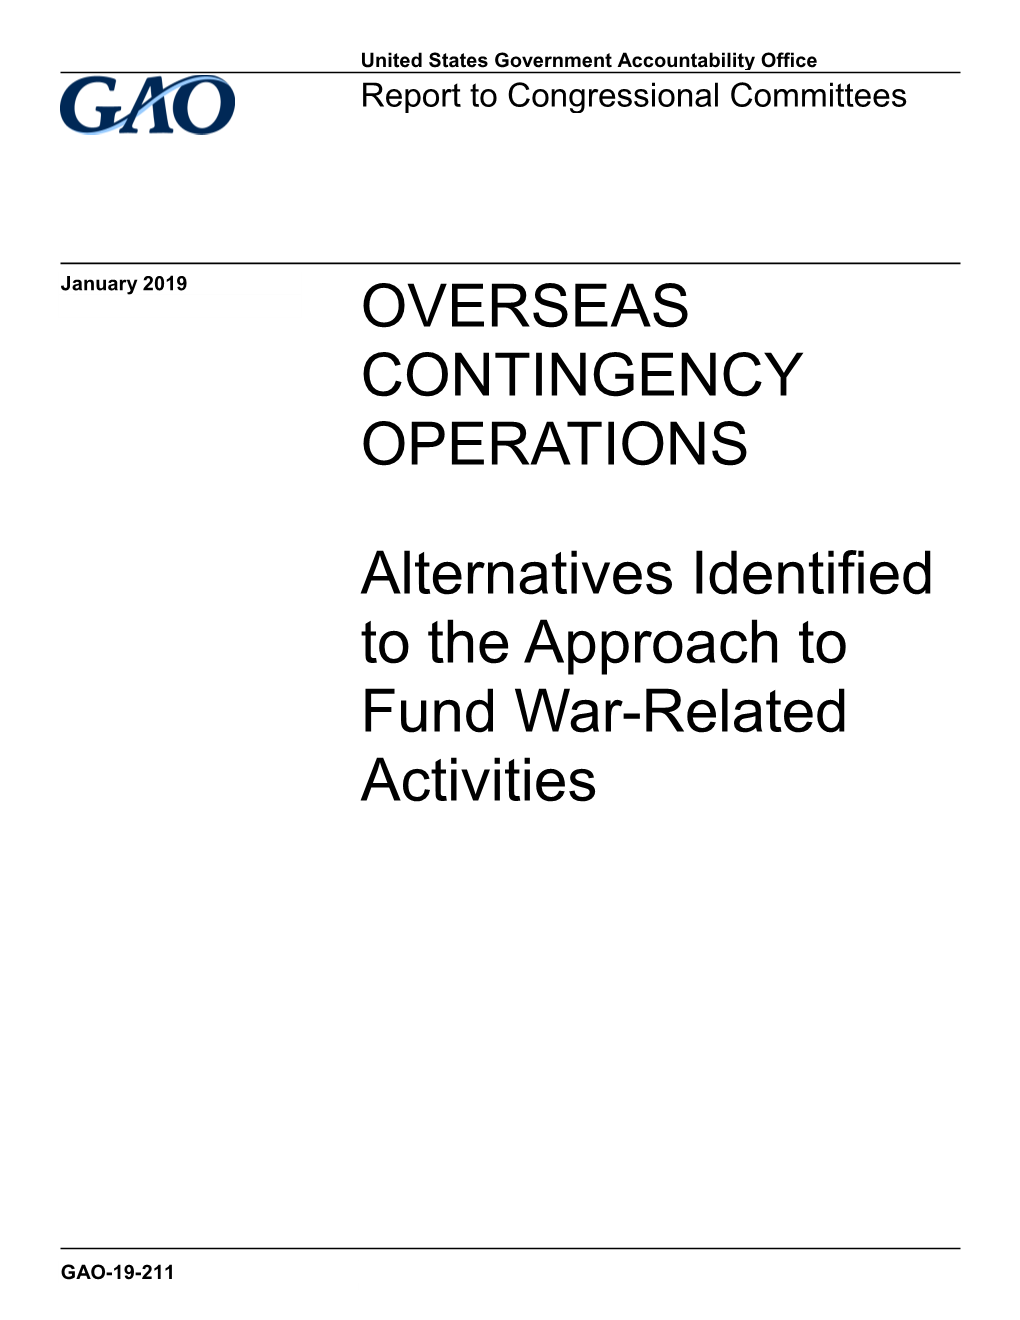 GAO-19-211, Overseas Contingency Operations: Alternatives Identified